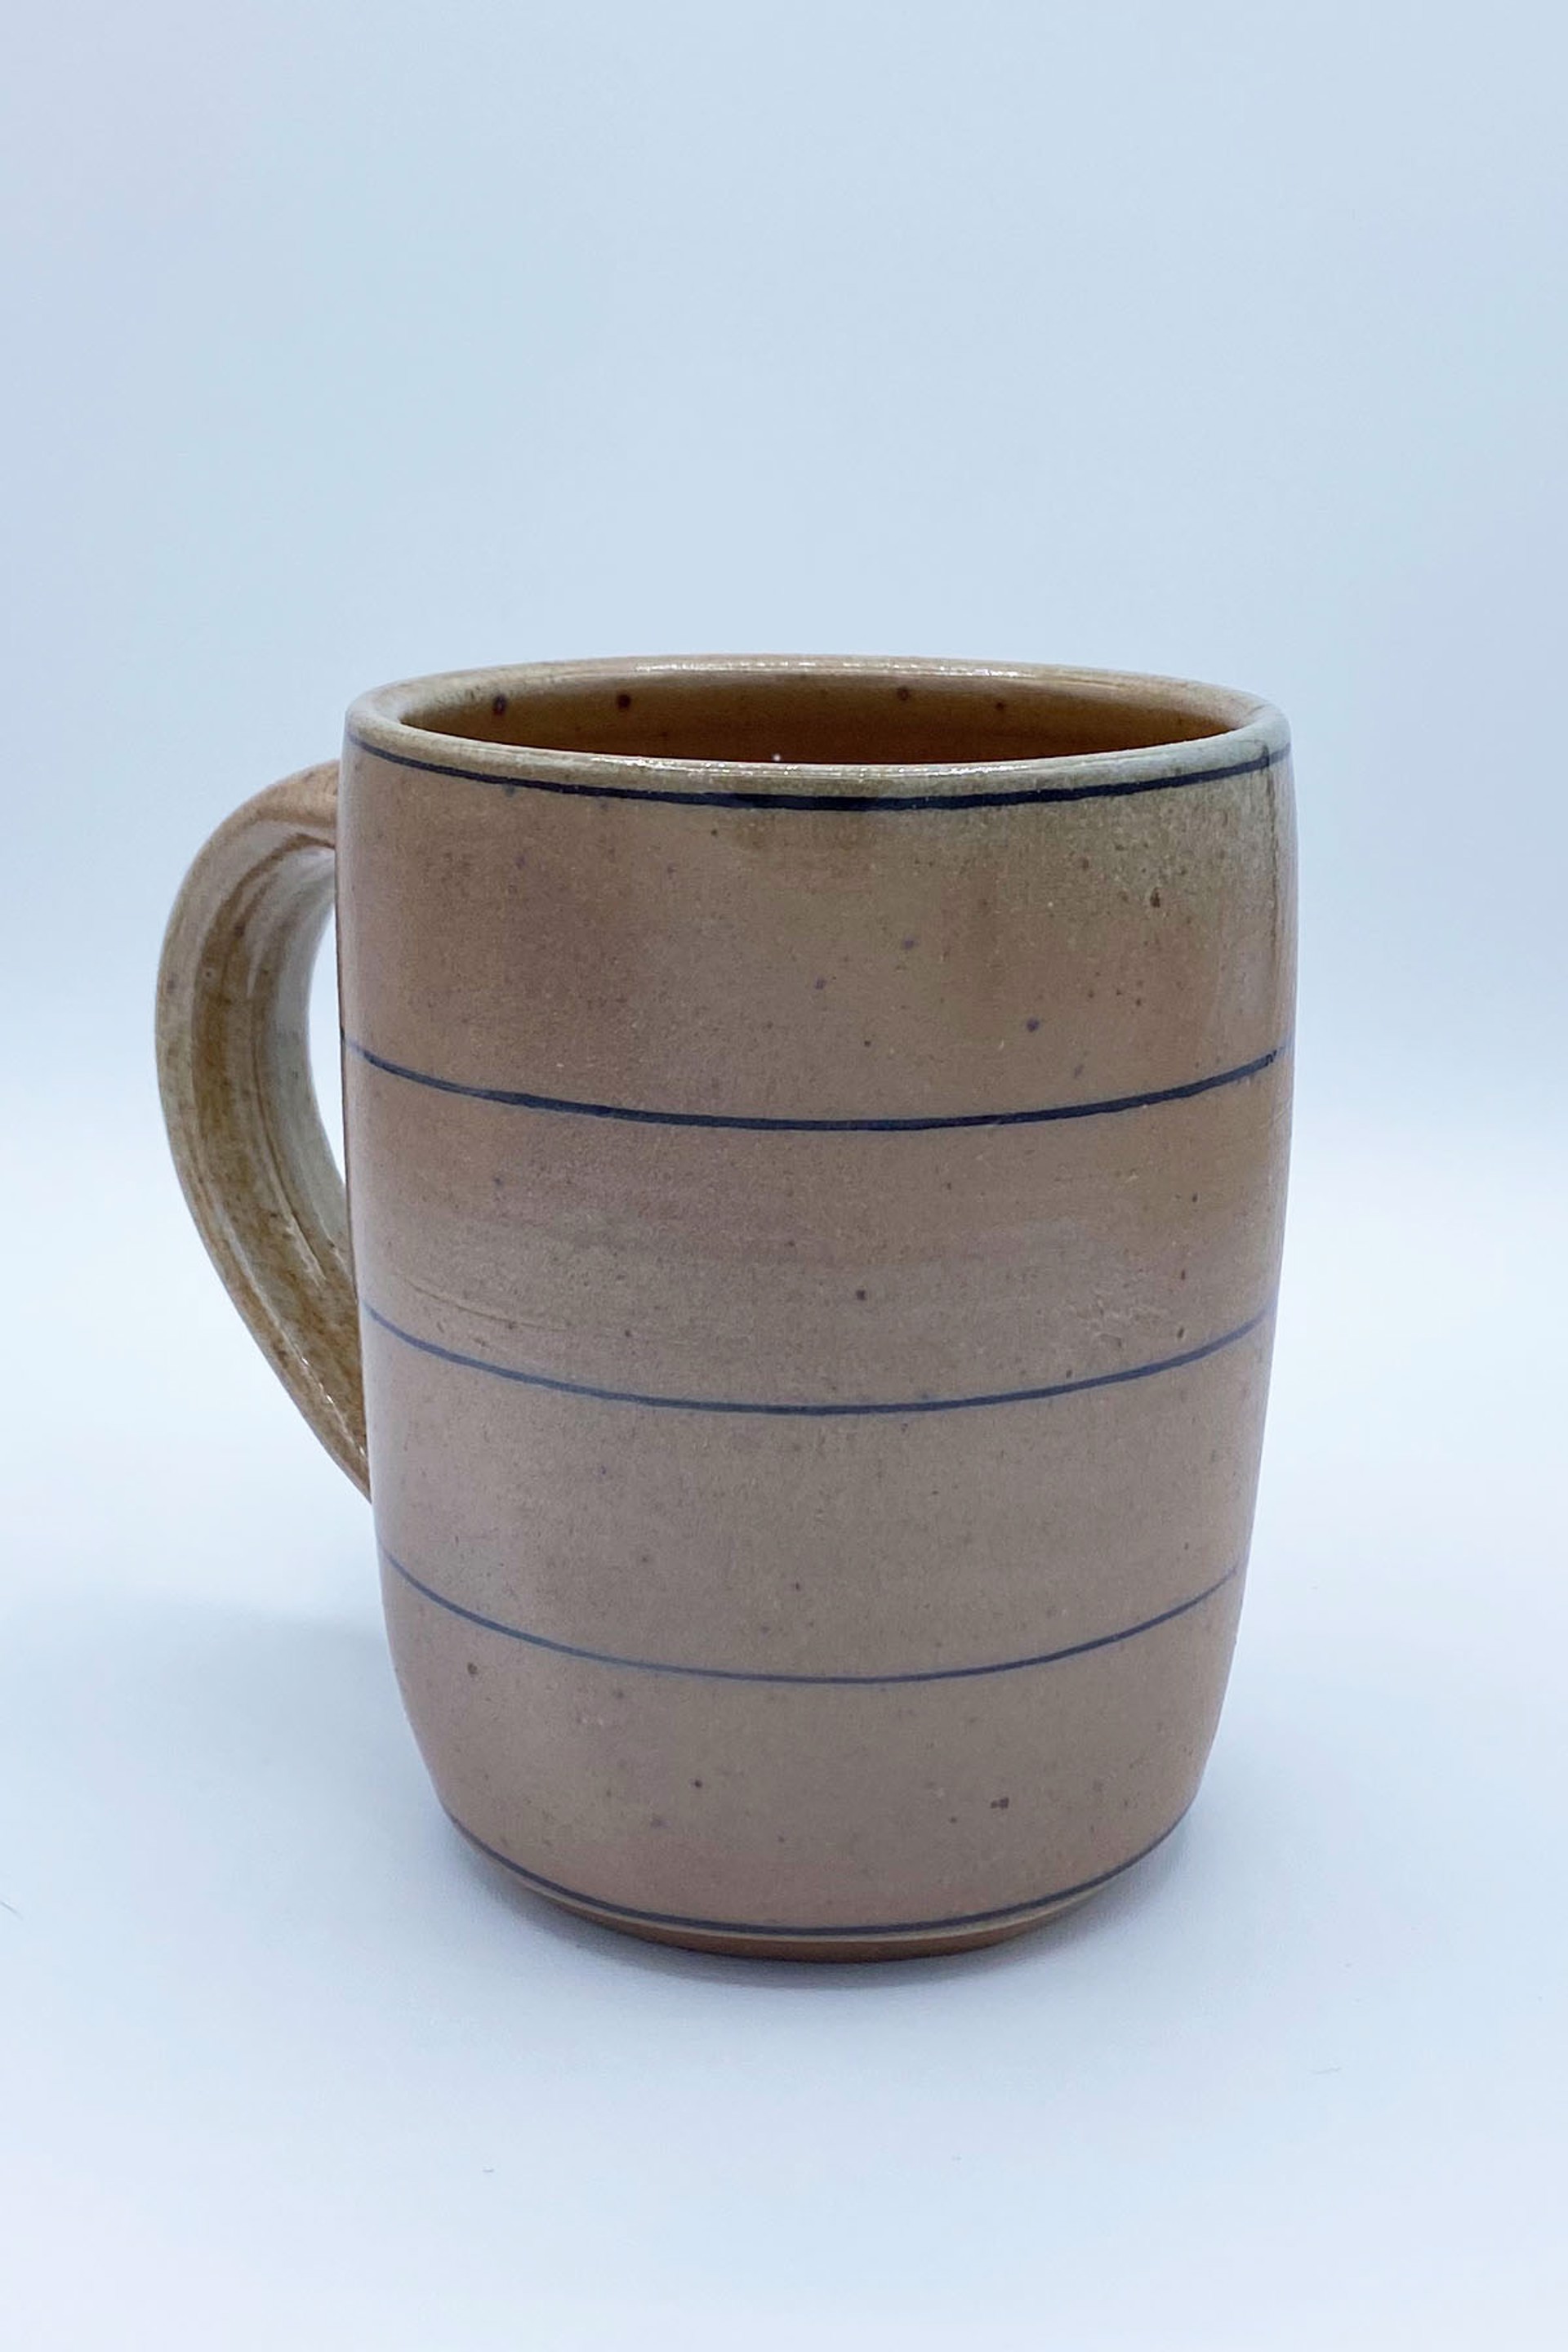 Mug 5 by Laura Cooke